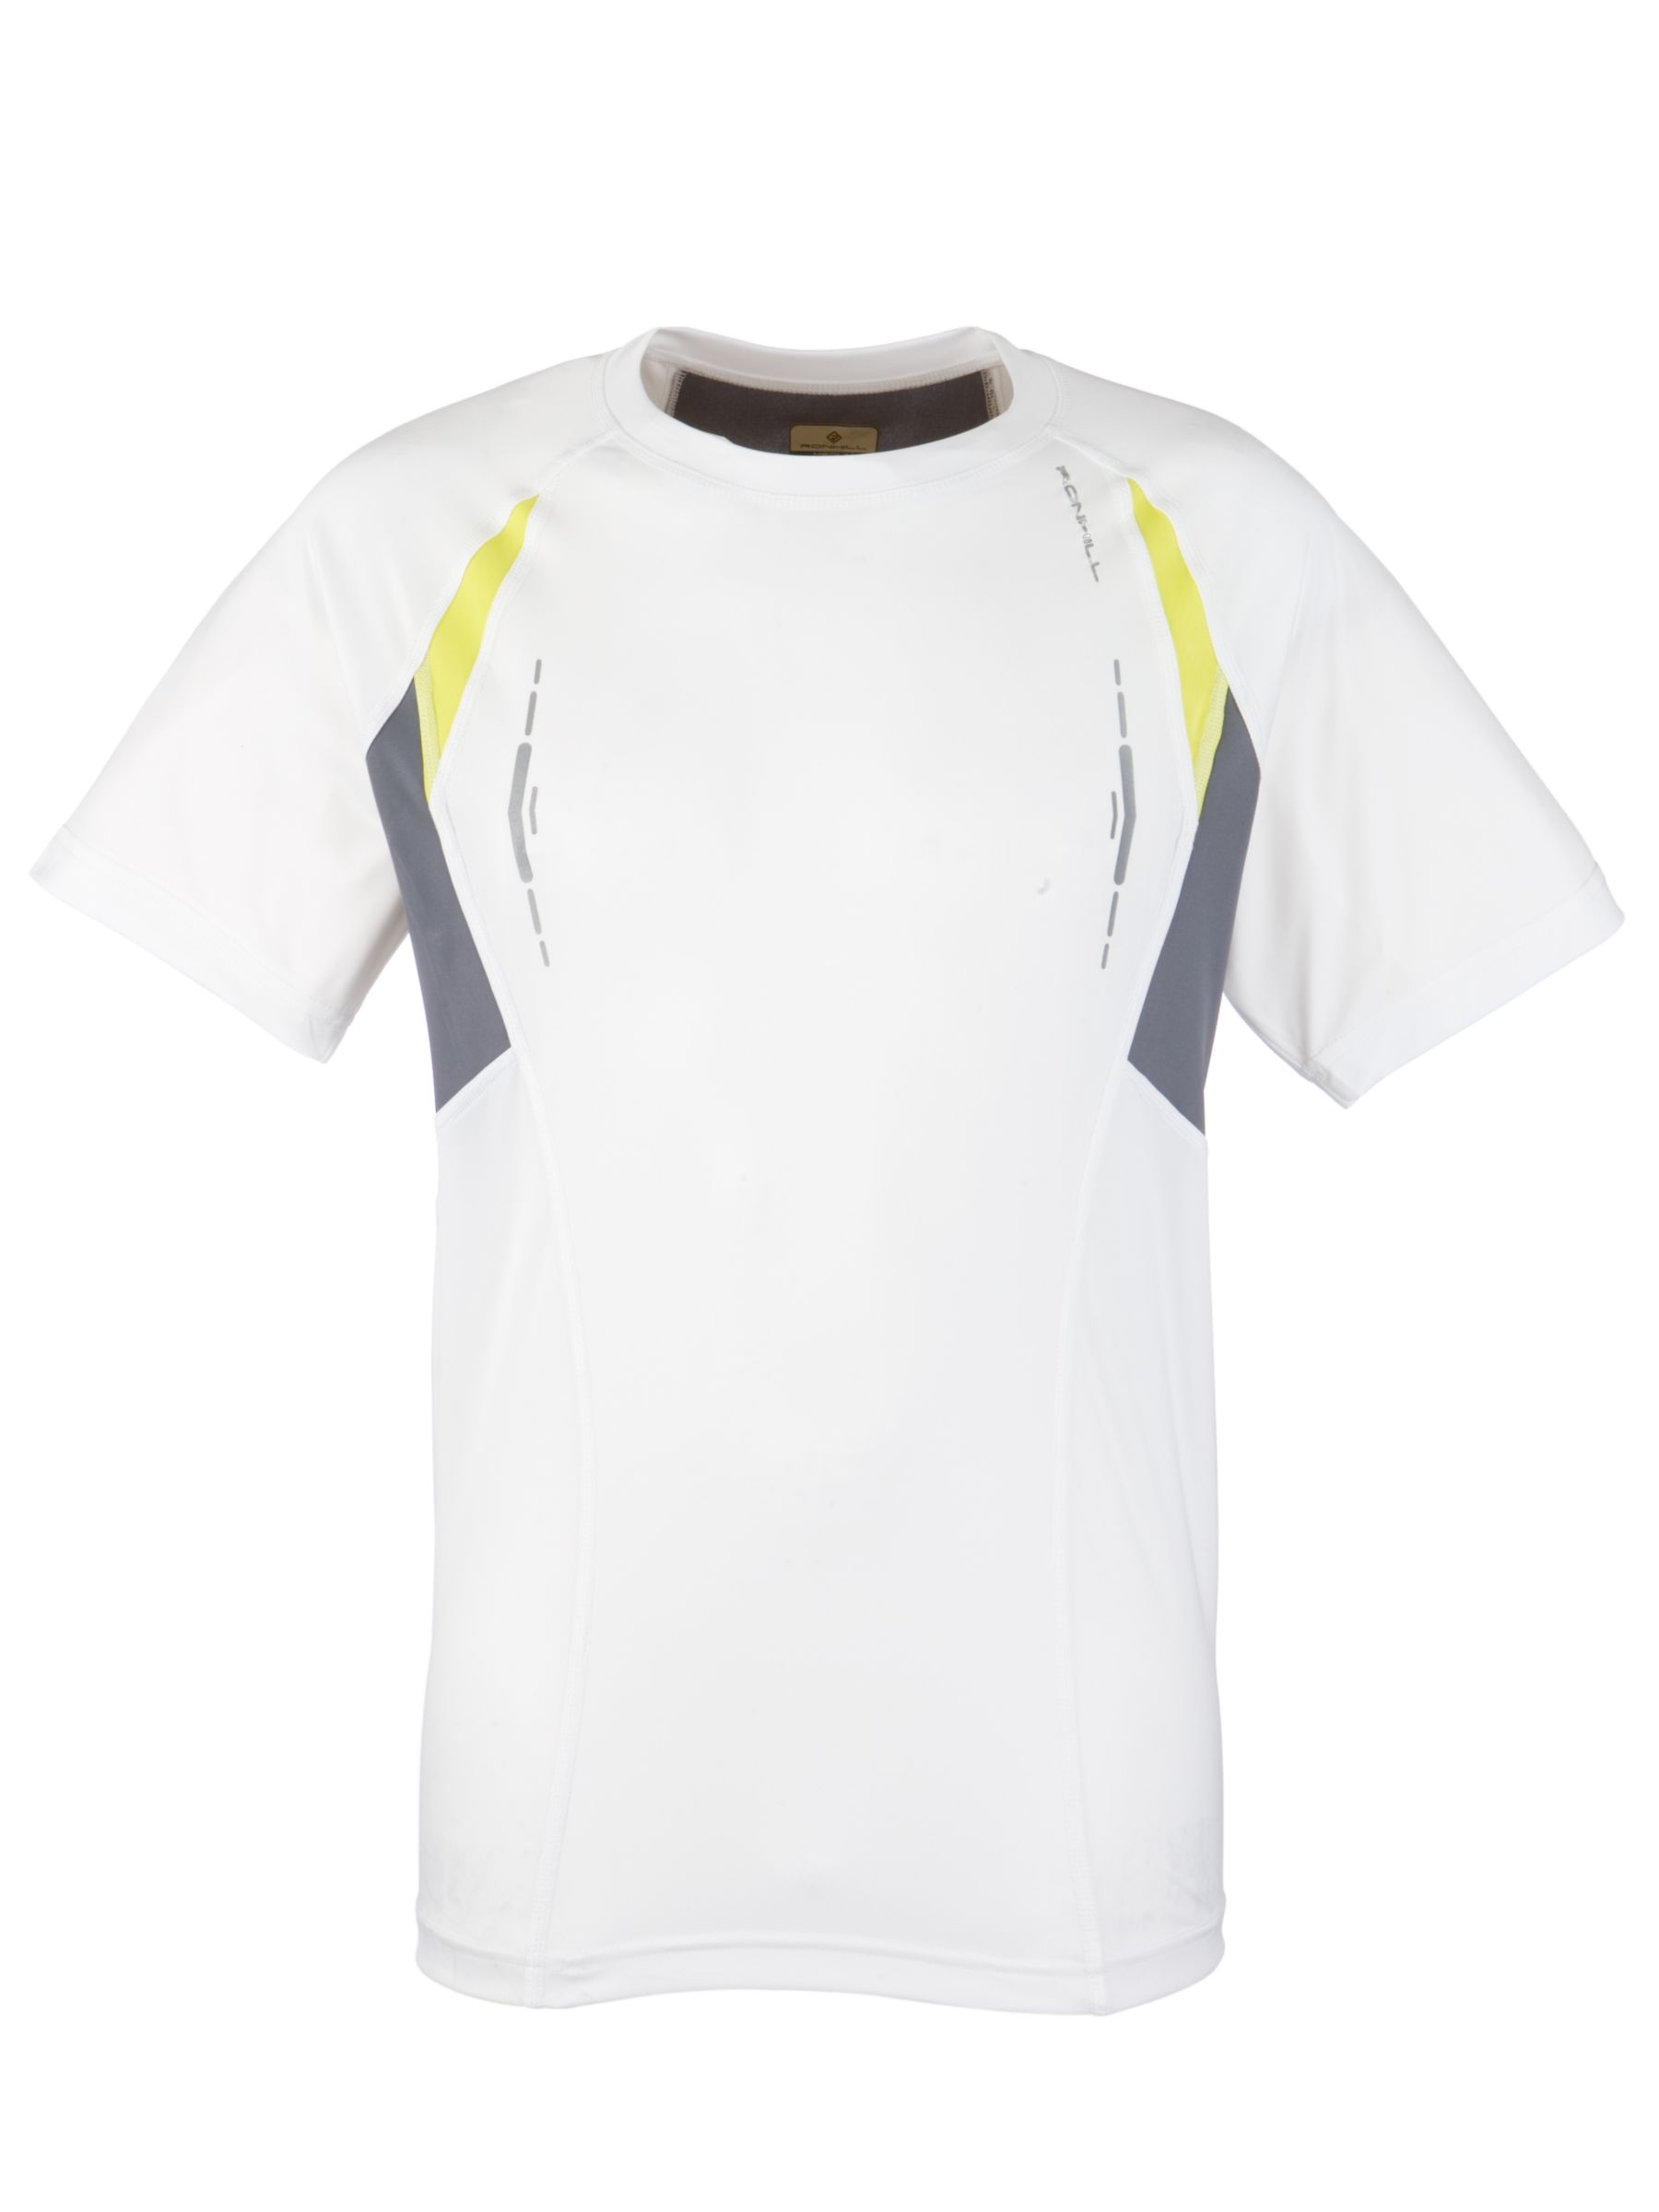 Advance Sleeve Crew Neck T-Shirt, White